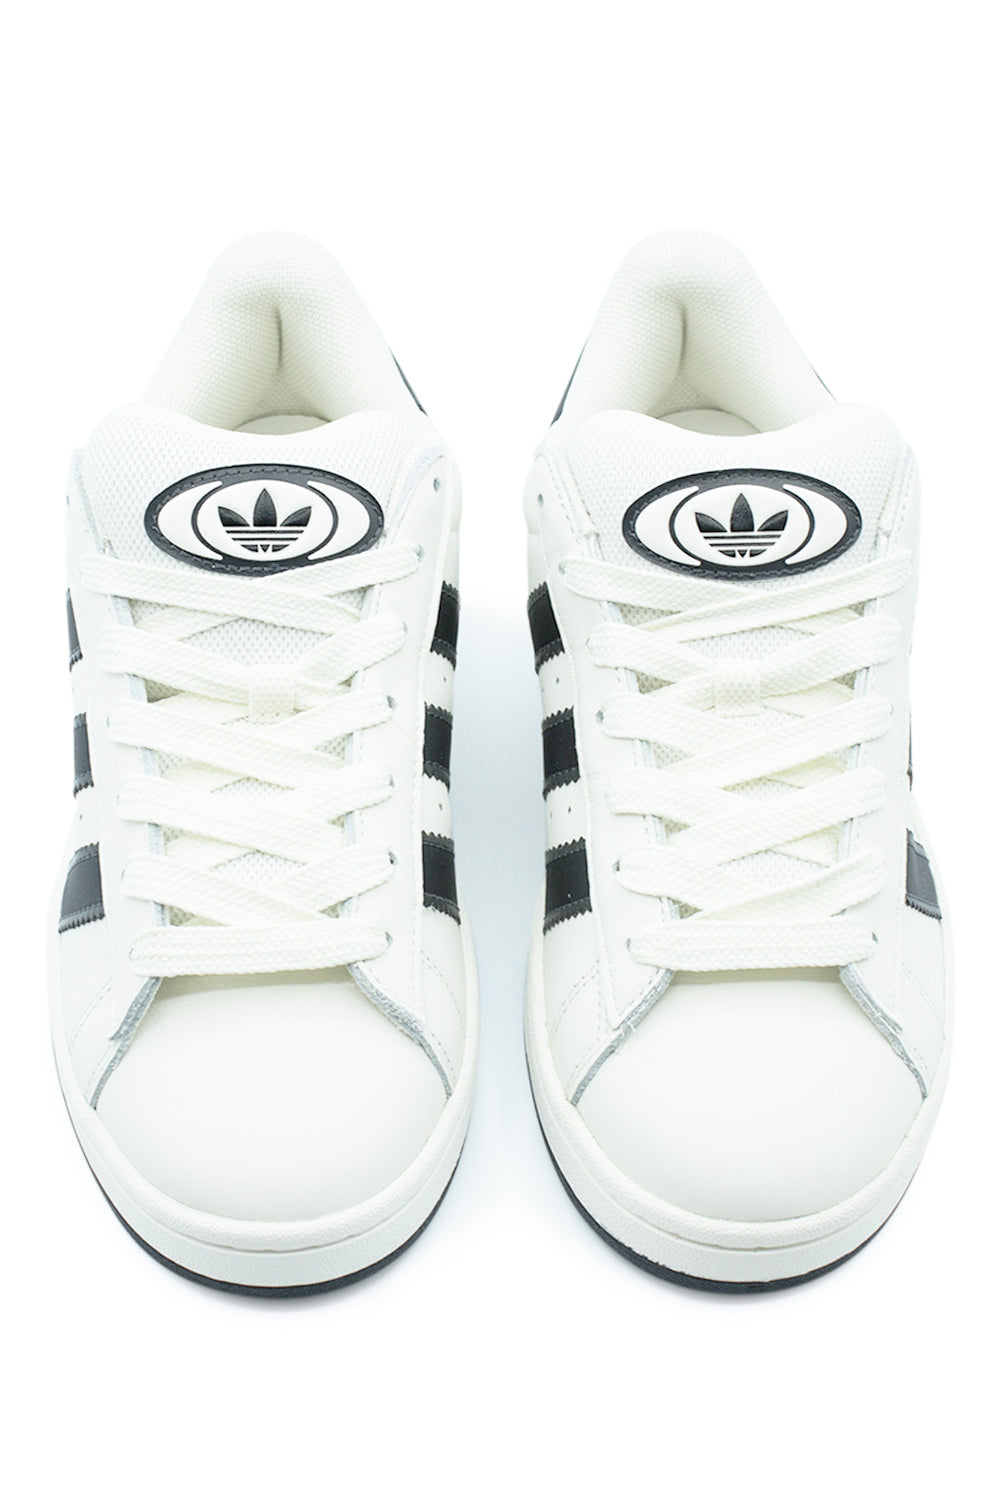 Adidas Campus 00s Shoe Chalk White / Core Black/ Off White - BONKERS